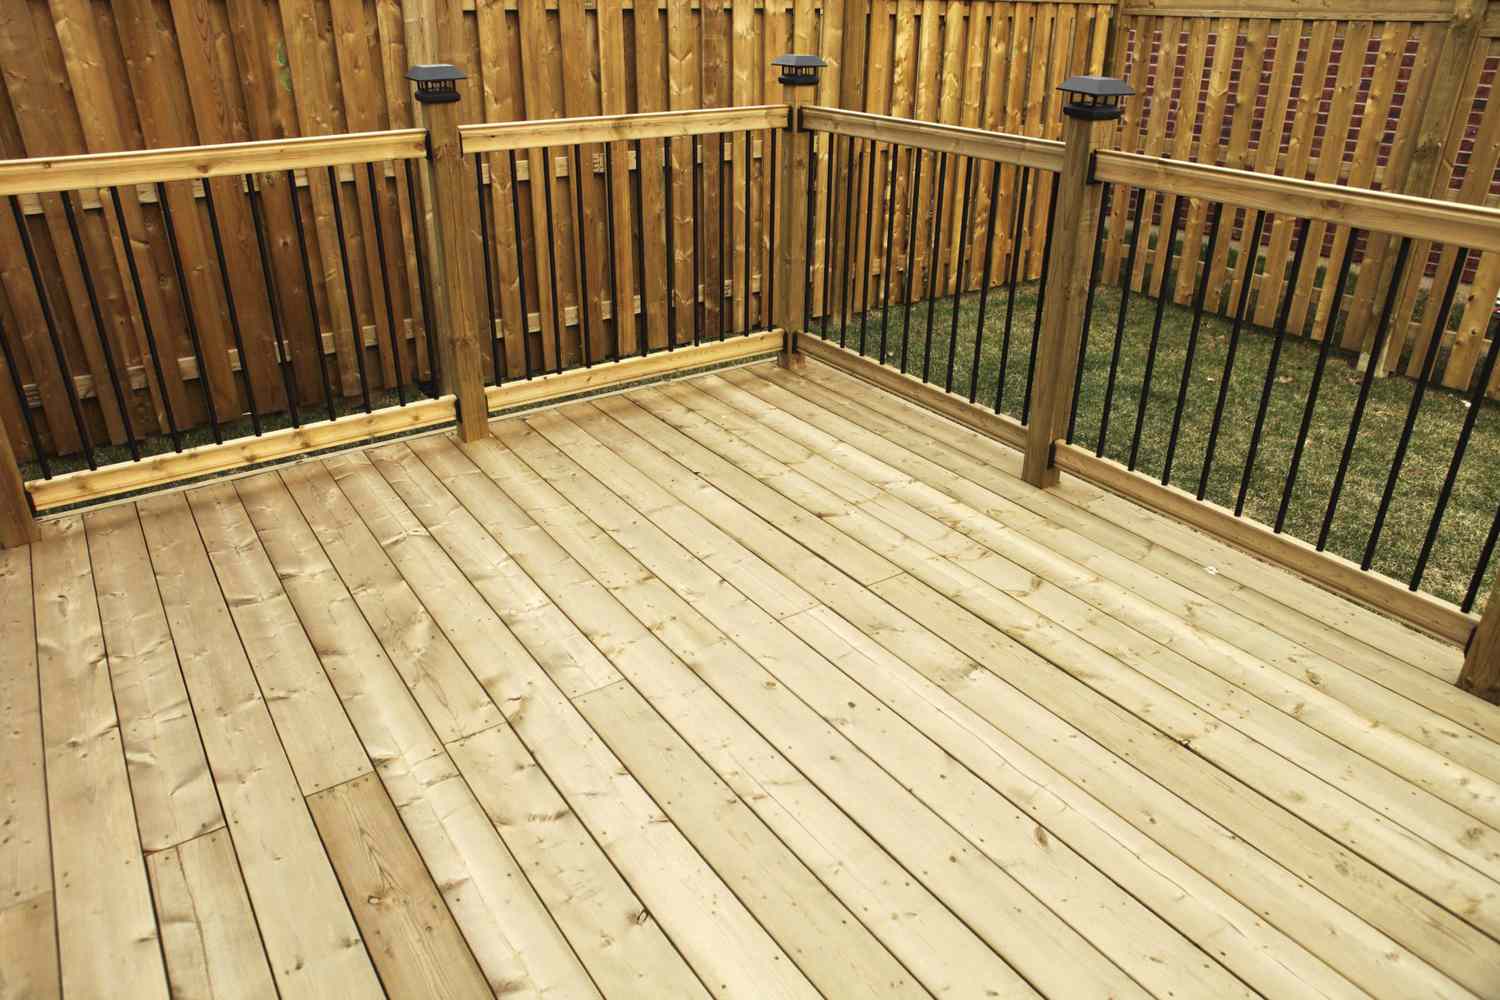 A sturdy wooden deck